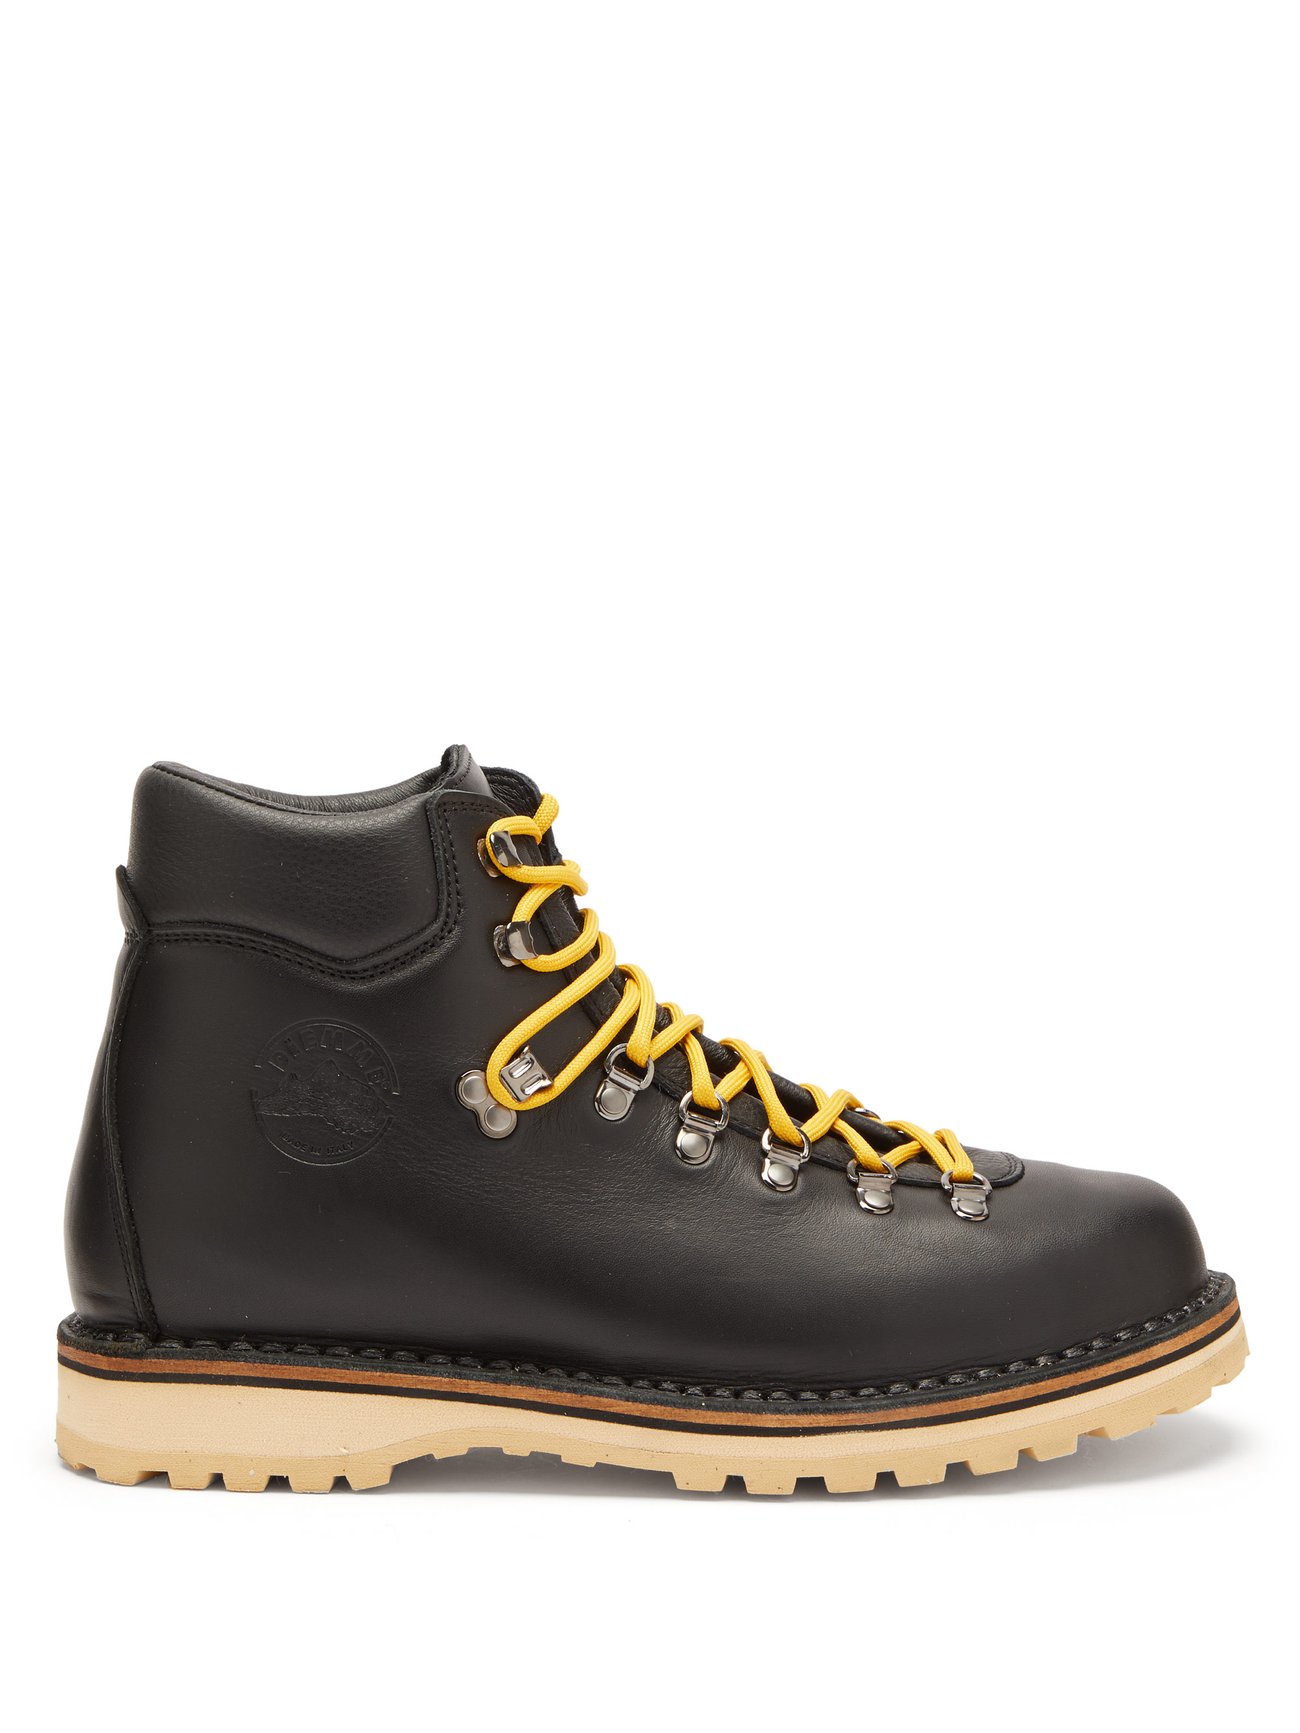 Black Roccia Vet tread-sole leather hiking boots | Diemme 